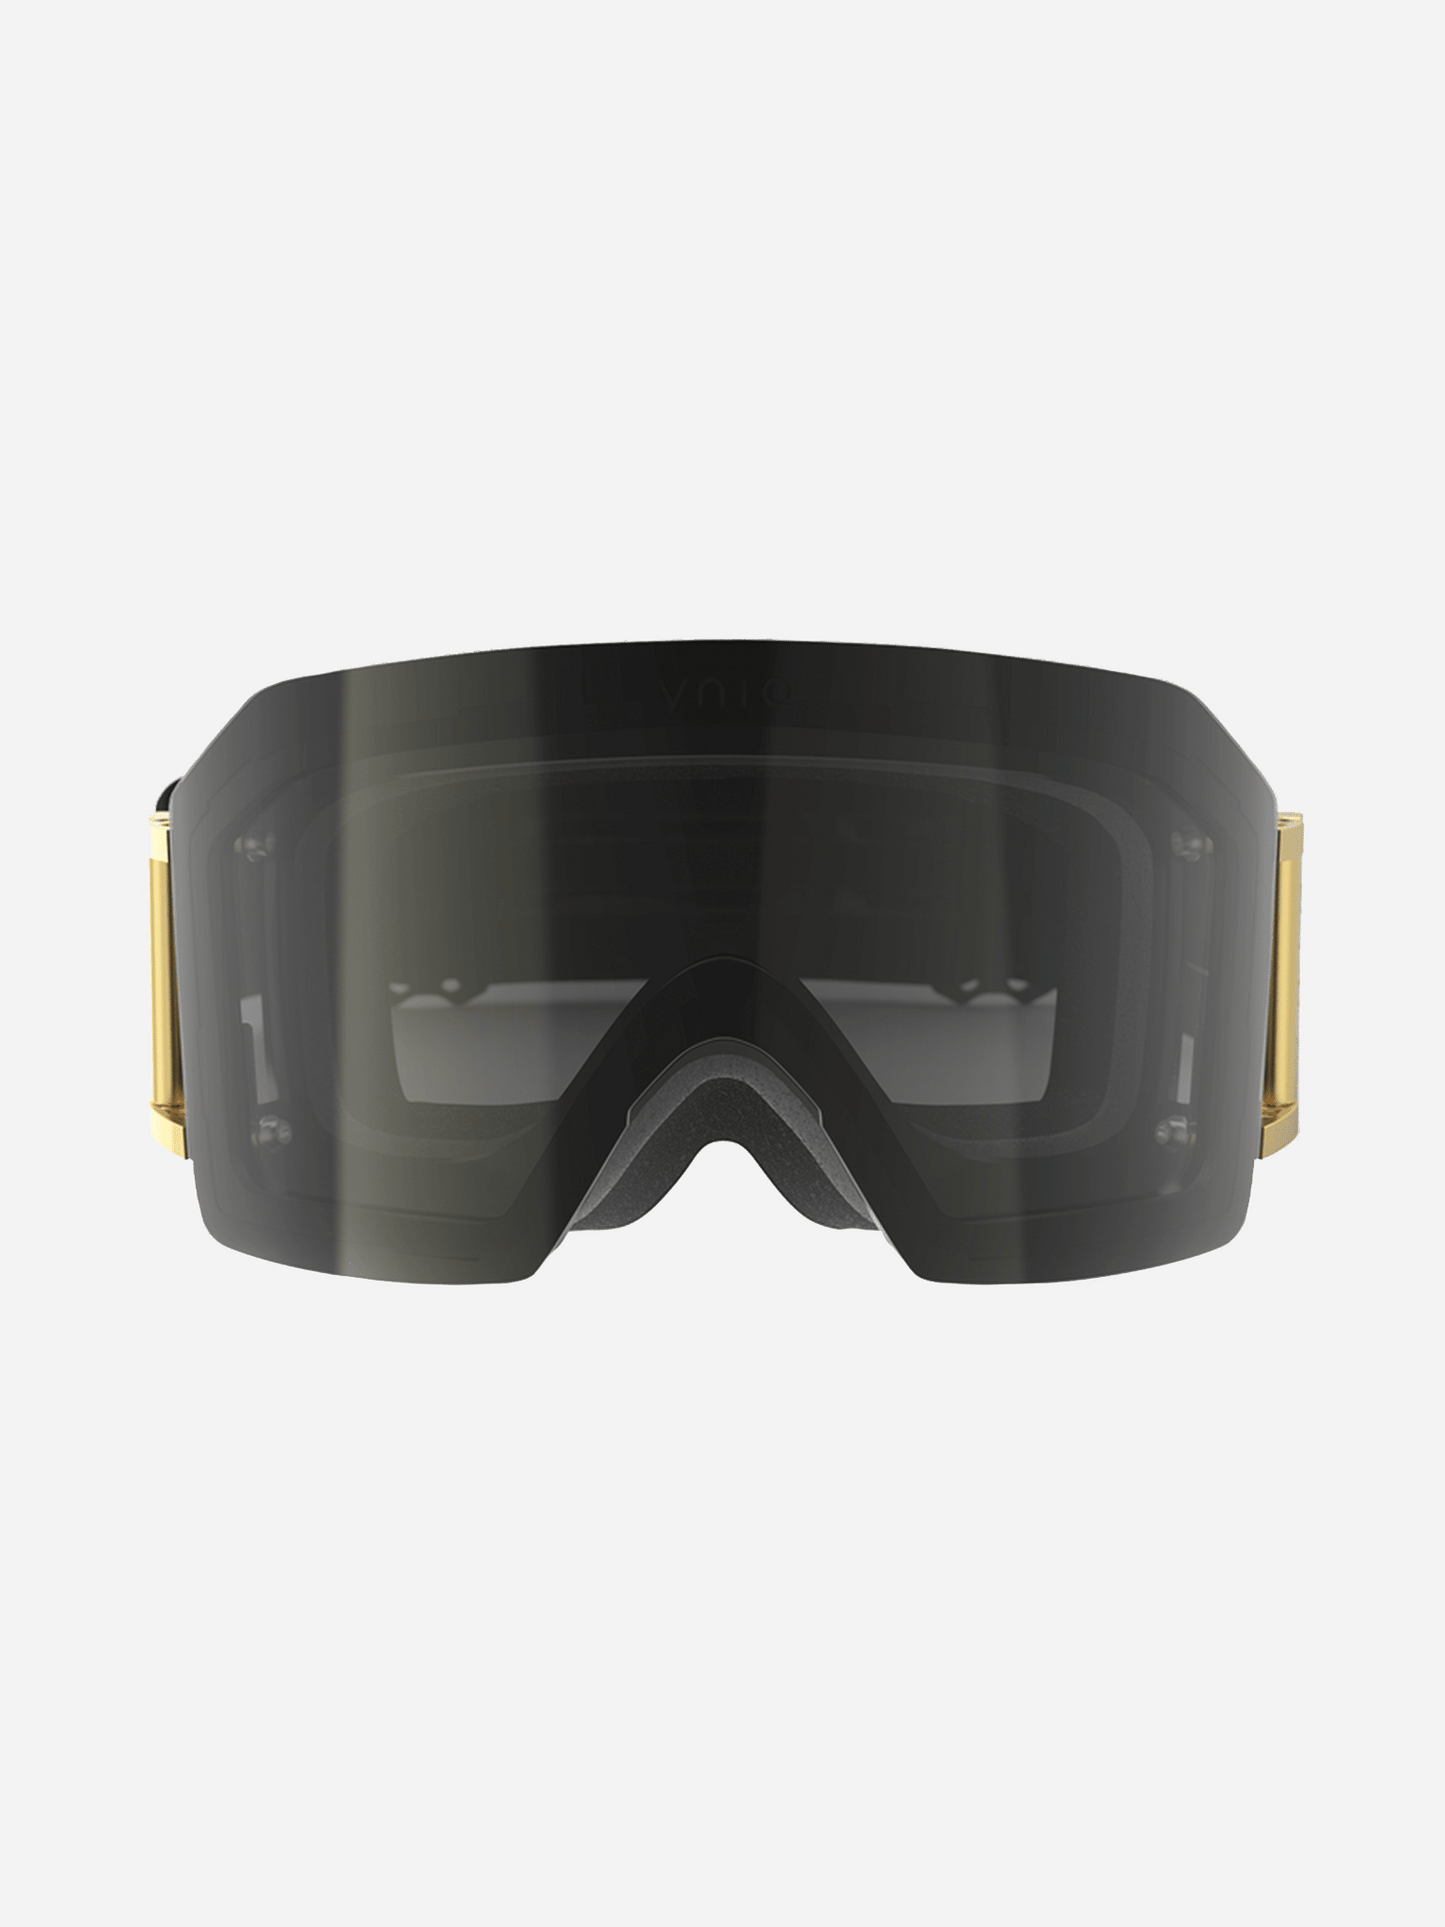 YNIQ Model Nine Black Gold Goggle